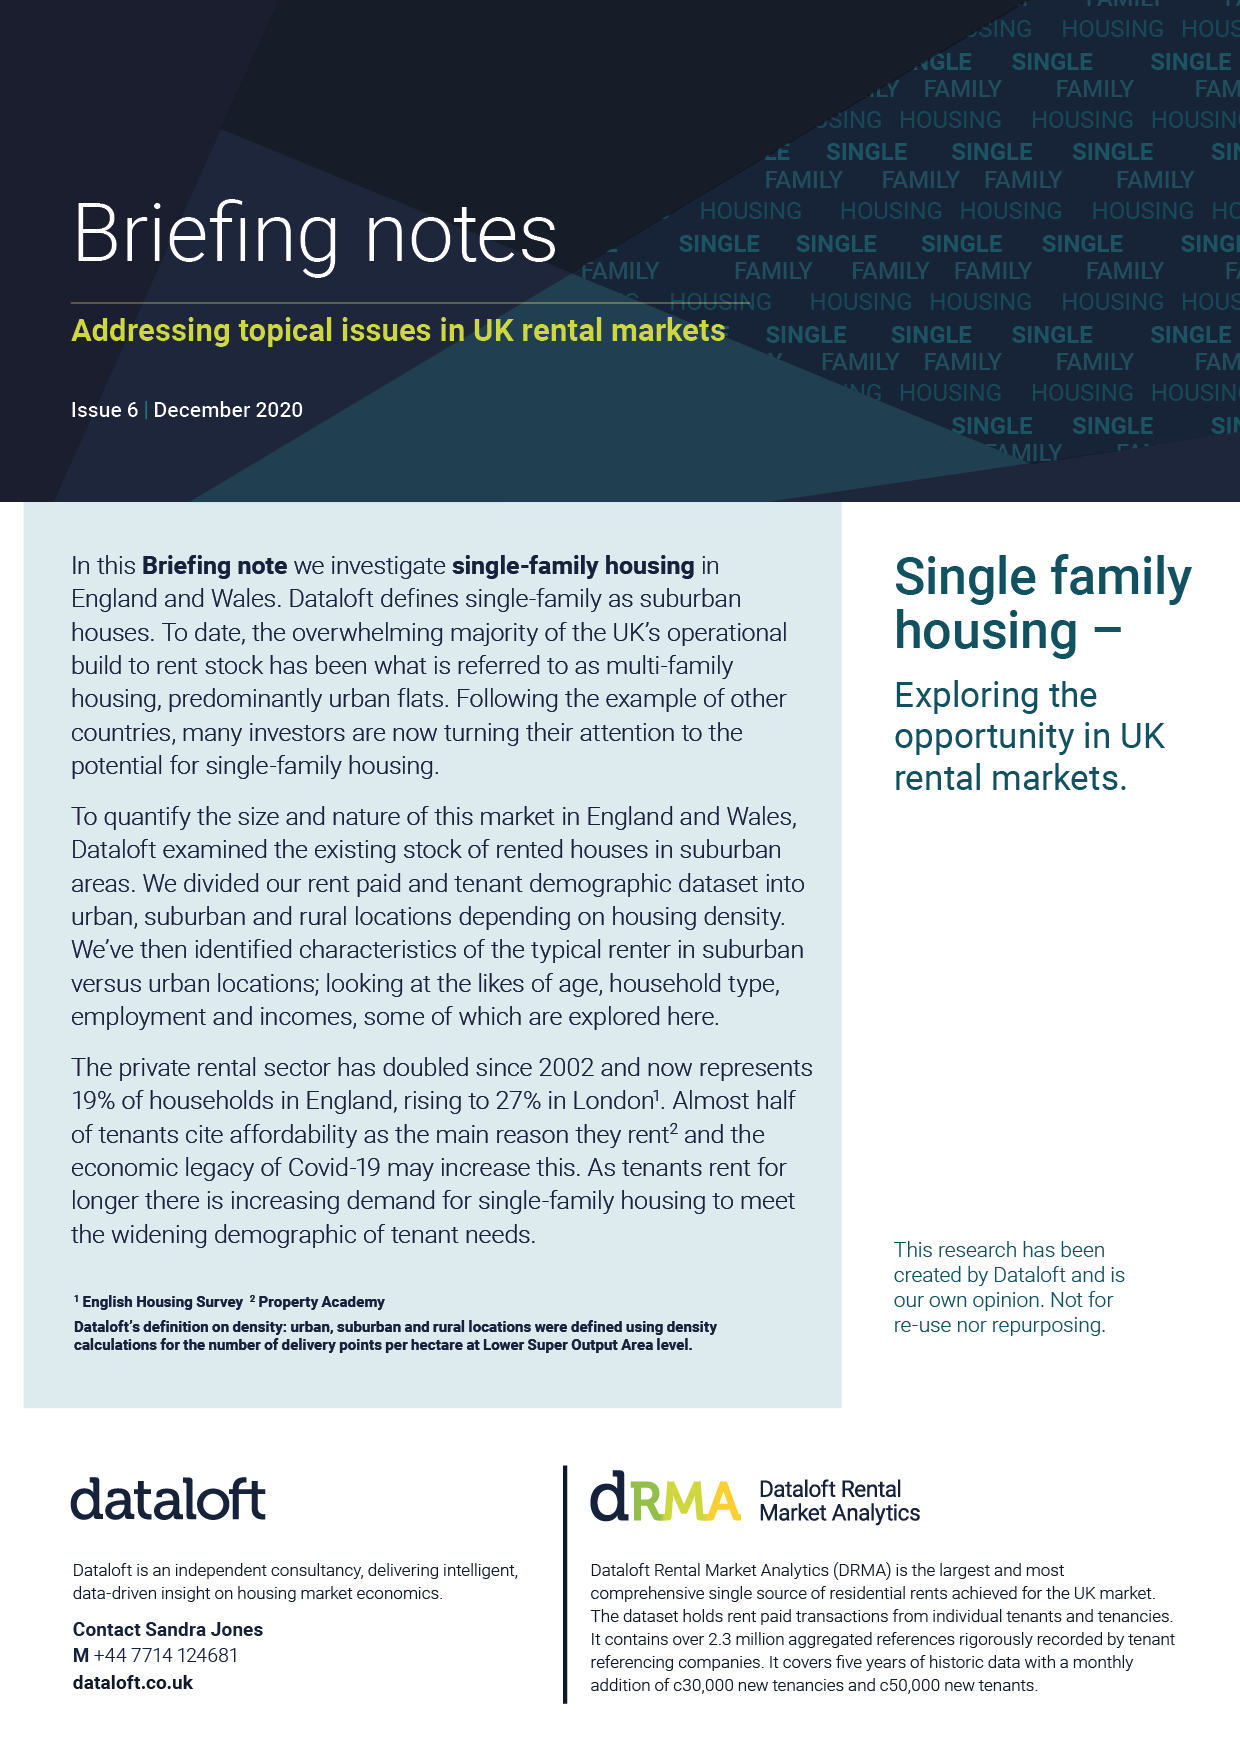 Dataloft Briefing notes 6: Single family housing – Exploring the  opportunity in UK rental markets. — Dataloft